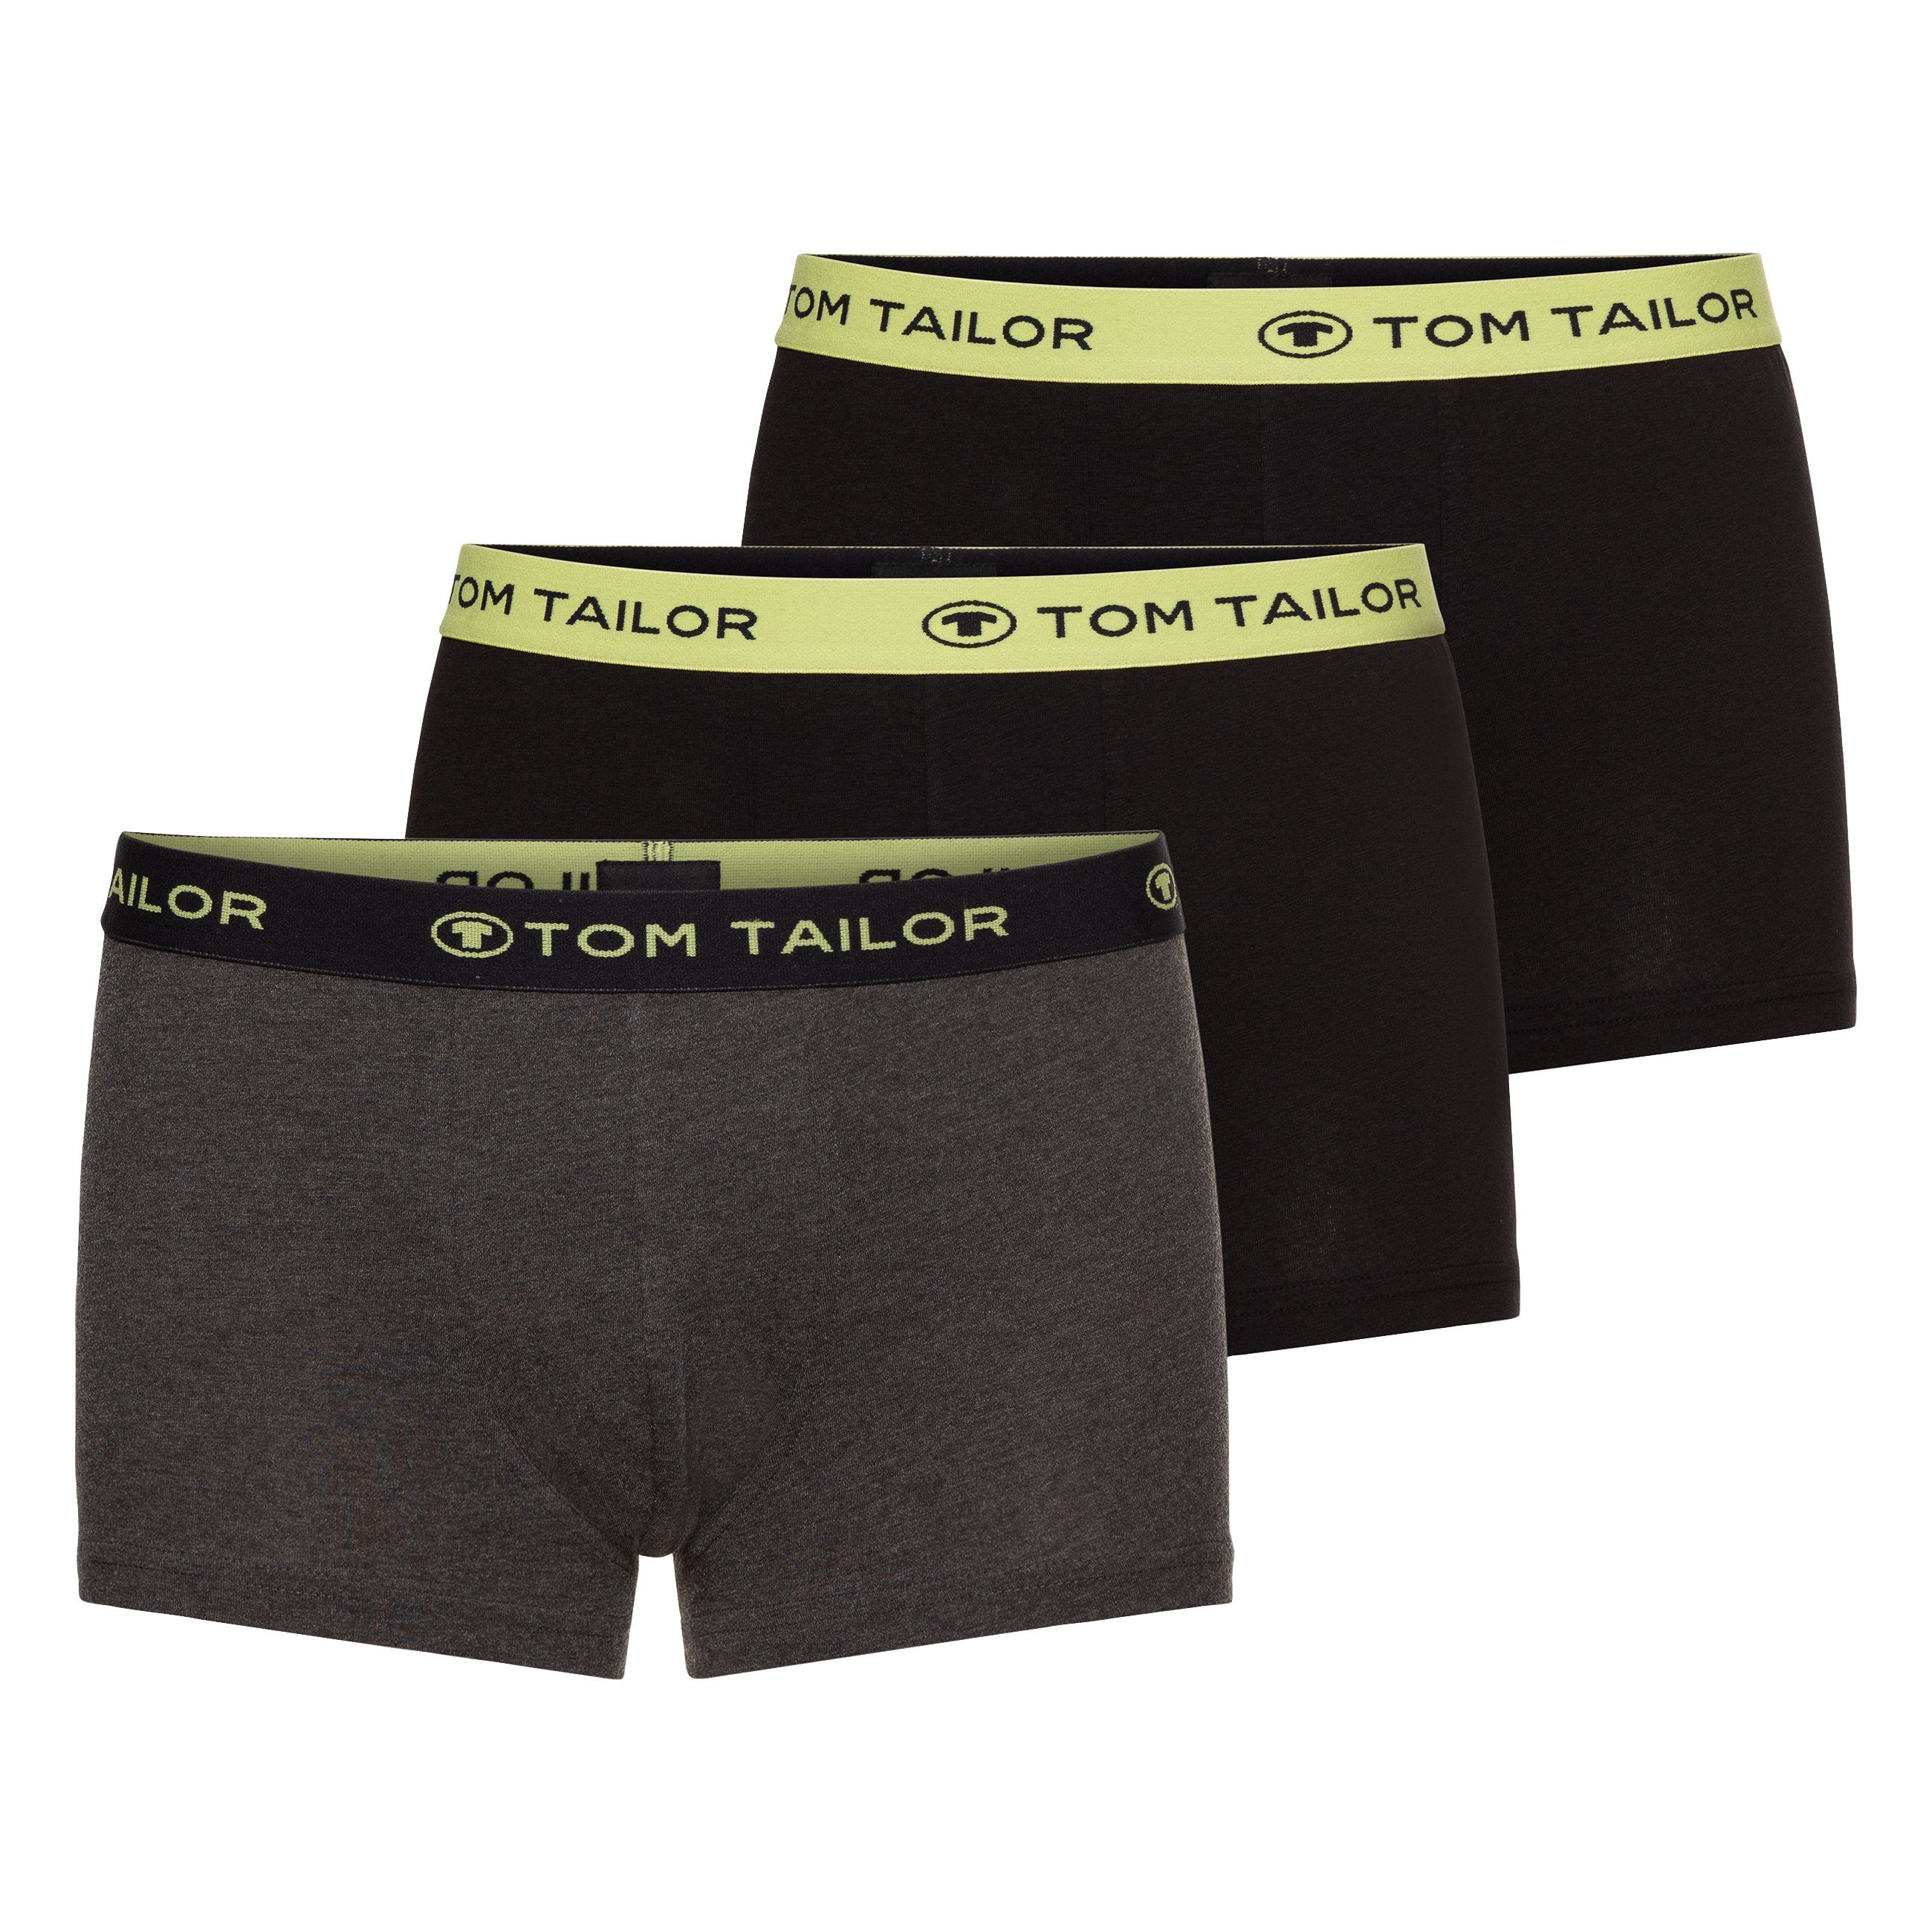 TOM TAILOR Boxershorts TOM TAILOR Herren Pants grau uni 3er Pack (3-St) grau-dunkel-melange